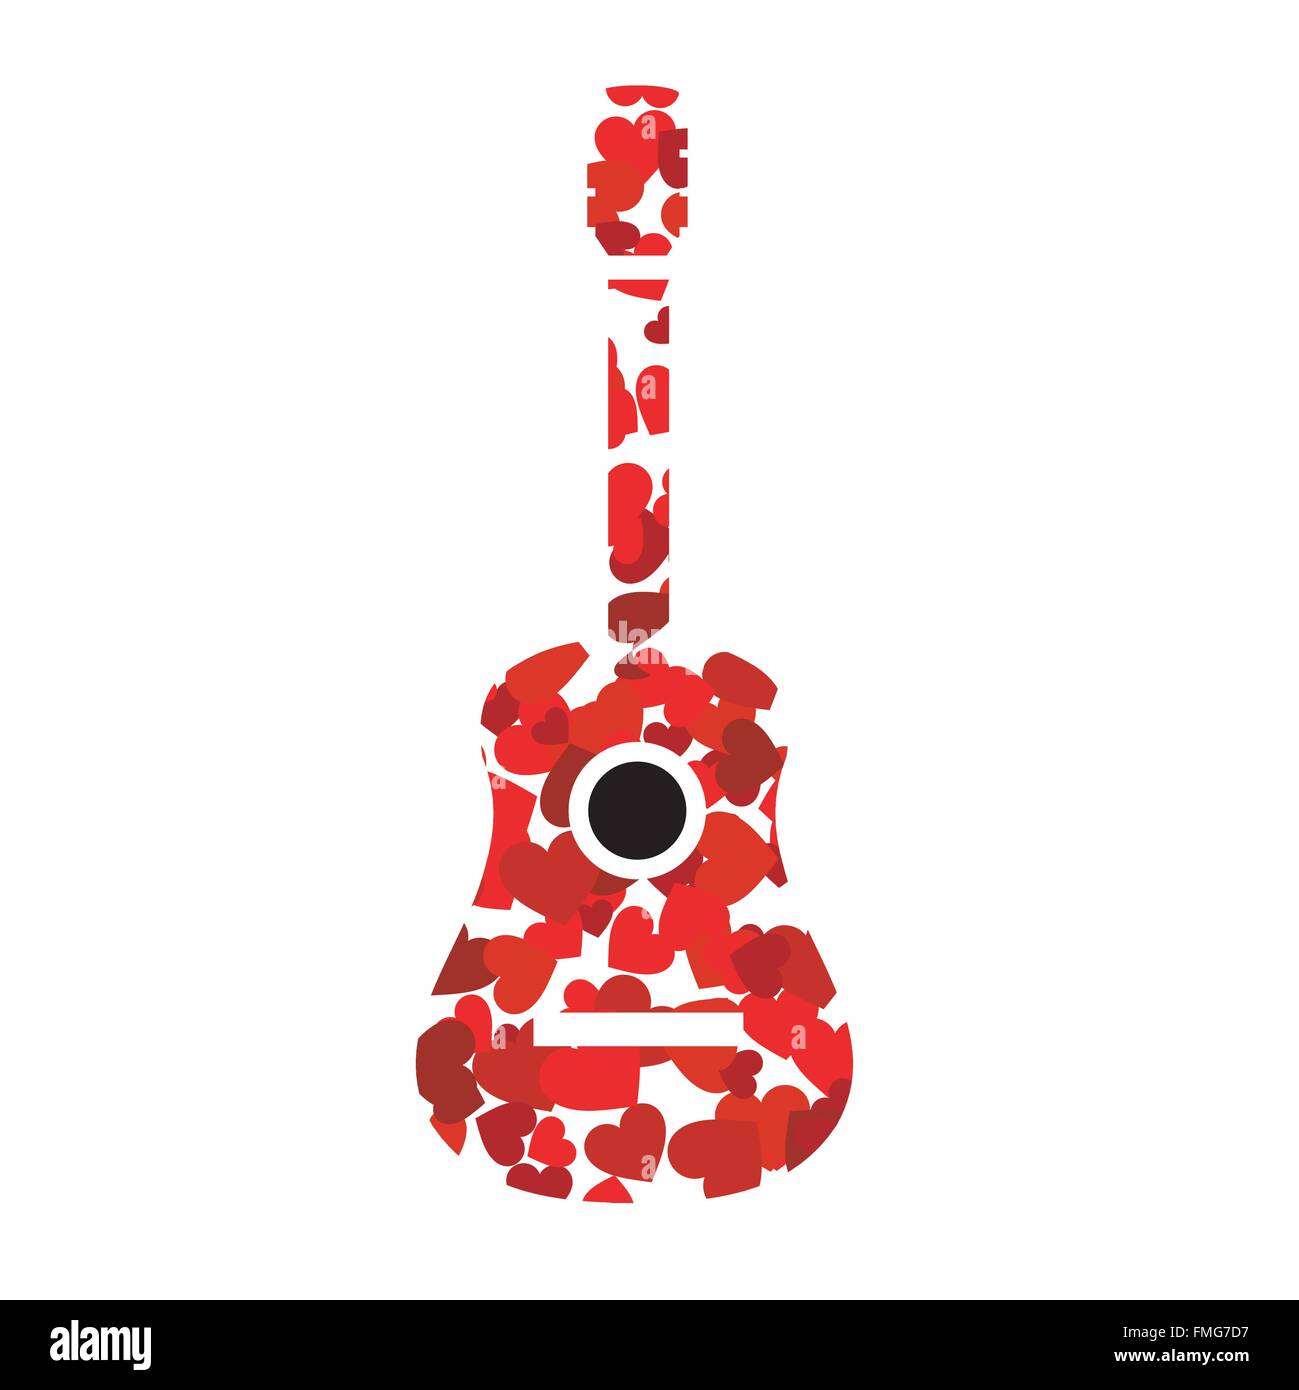 Gitarre mit roten Herzen Stock-Vektorgrafik - Alamy